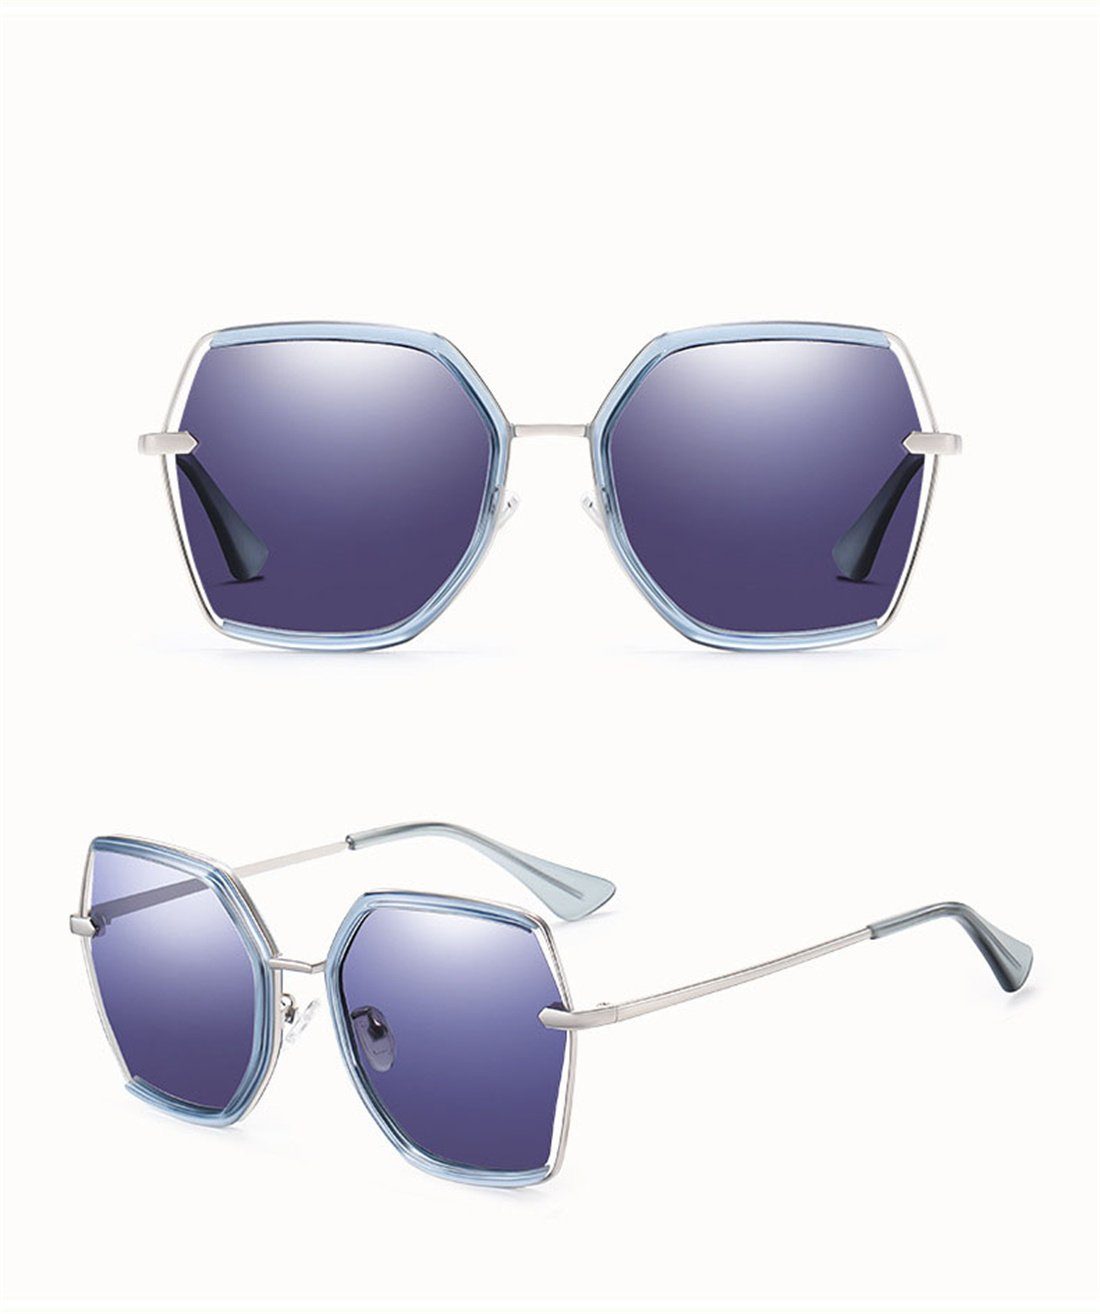 Sonnenbrille DÖRÖY Sonnenbrille Sonnenbrille, Braun Damen Sonnenschirme polarisierte Mode Box